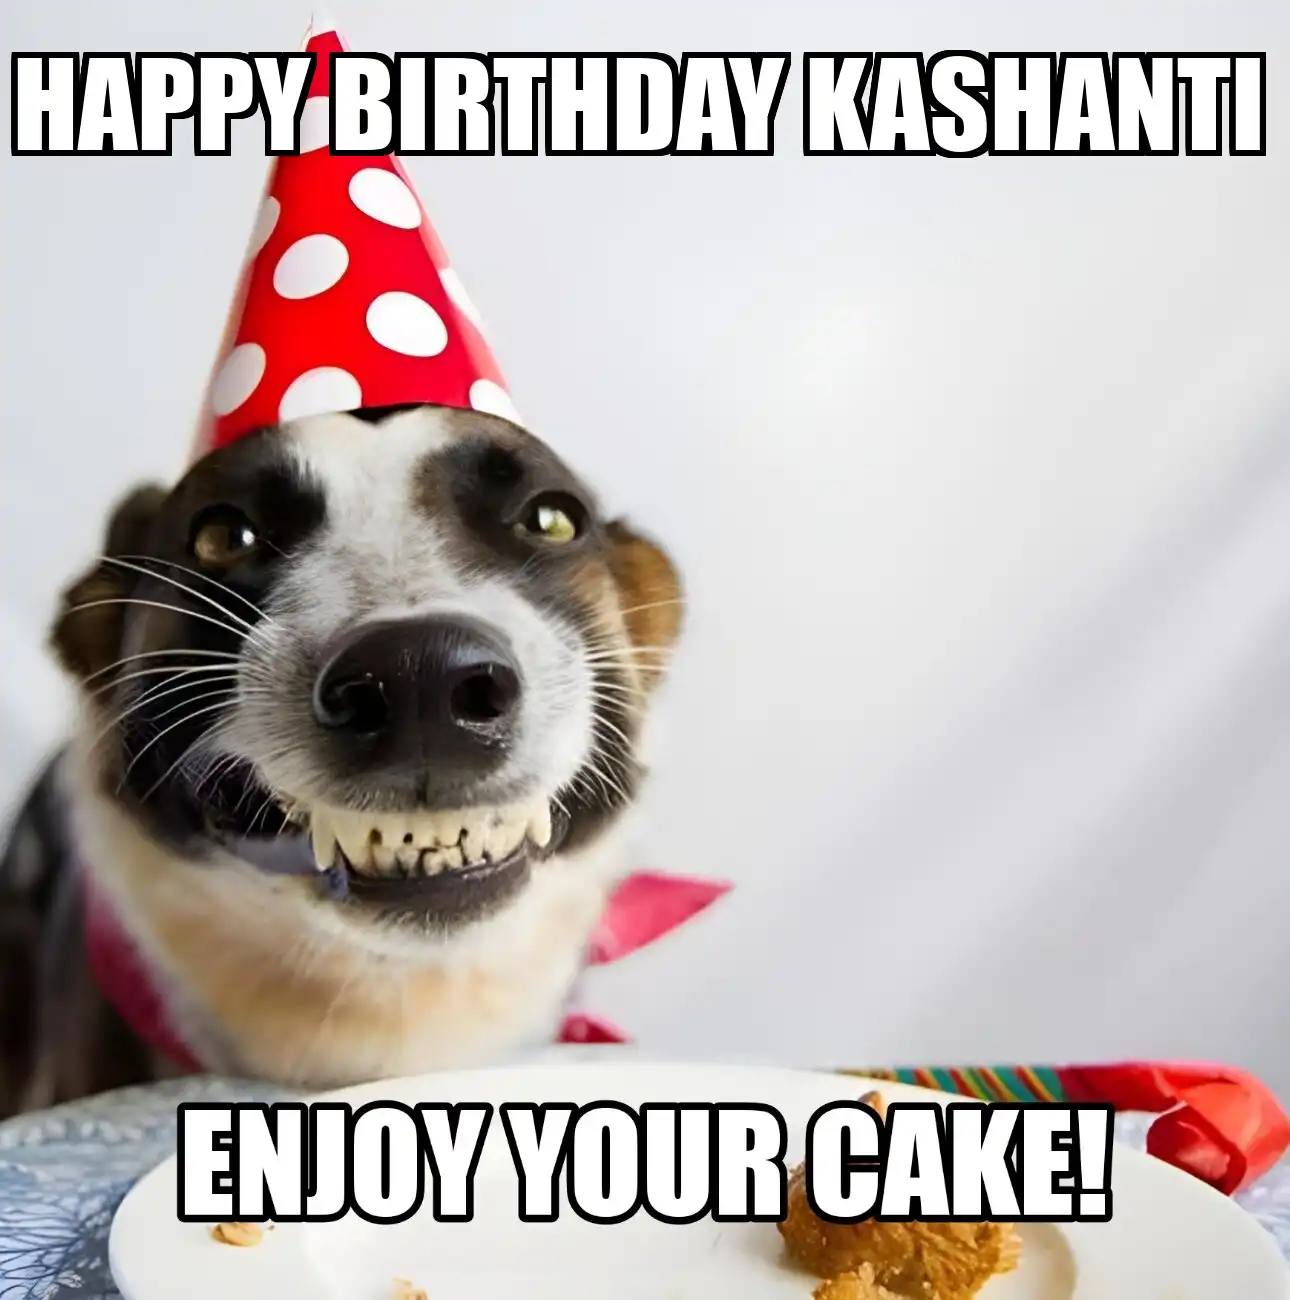 Happy Birthday Kashanti Enjoy Your Cake Dog Meme